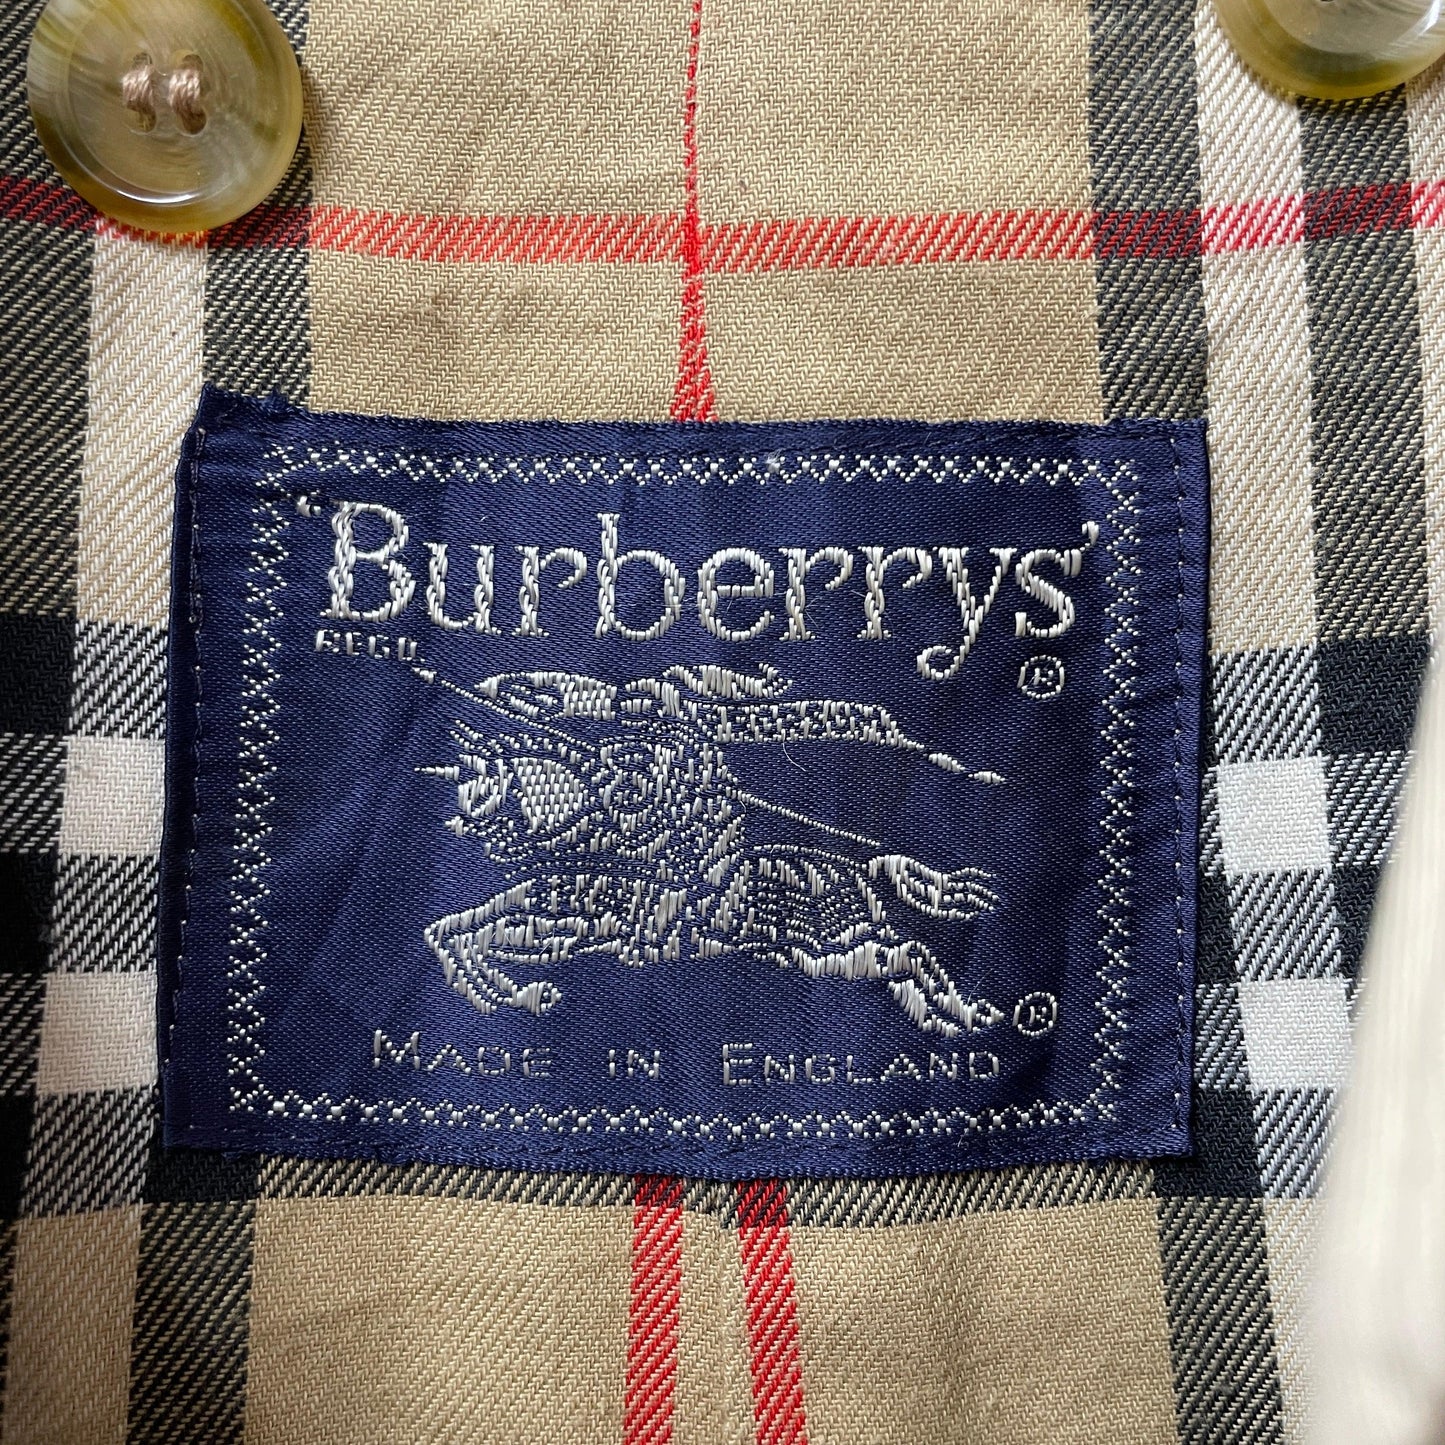 80s Burberrys trench coat Burberry trench coat